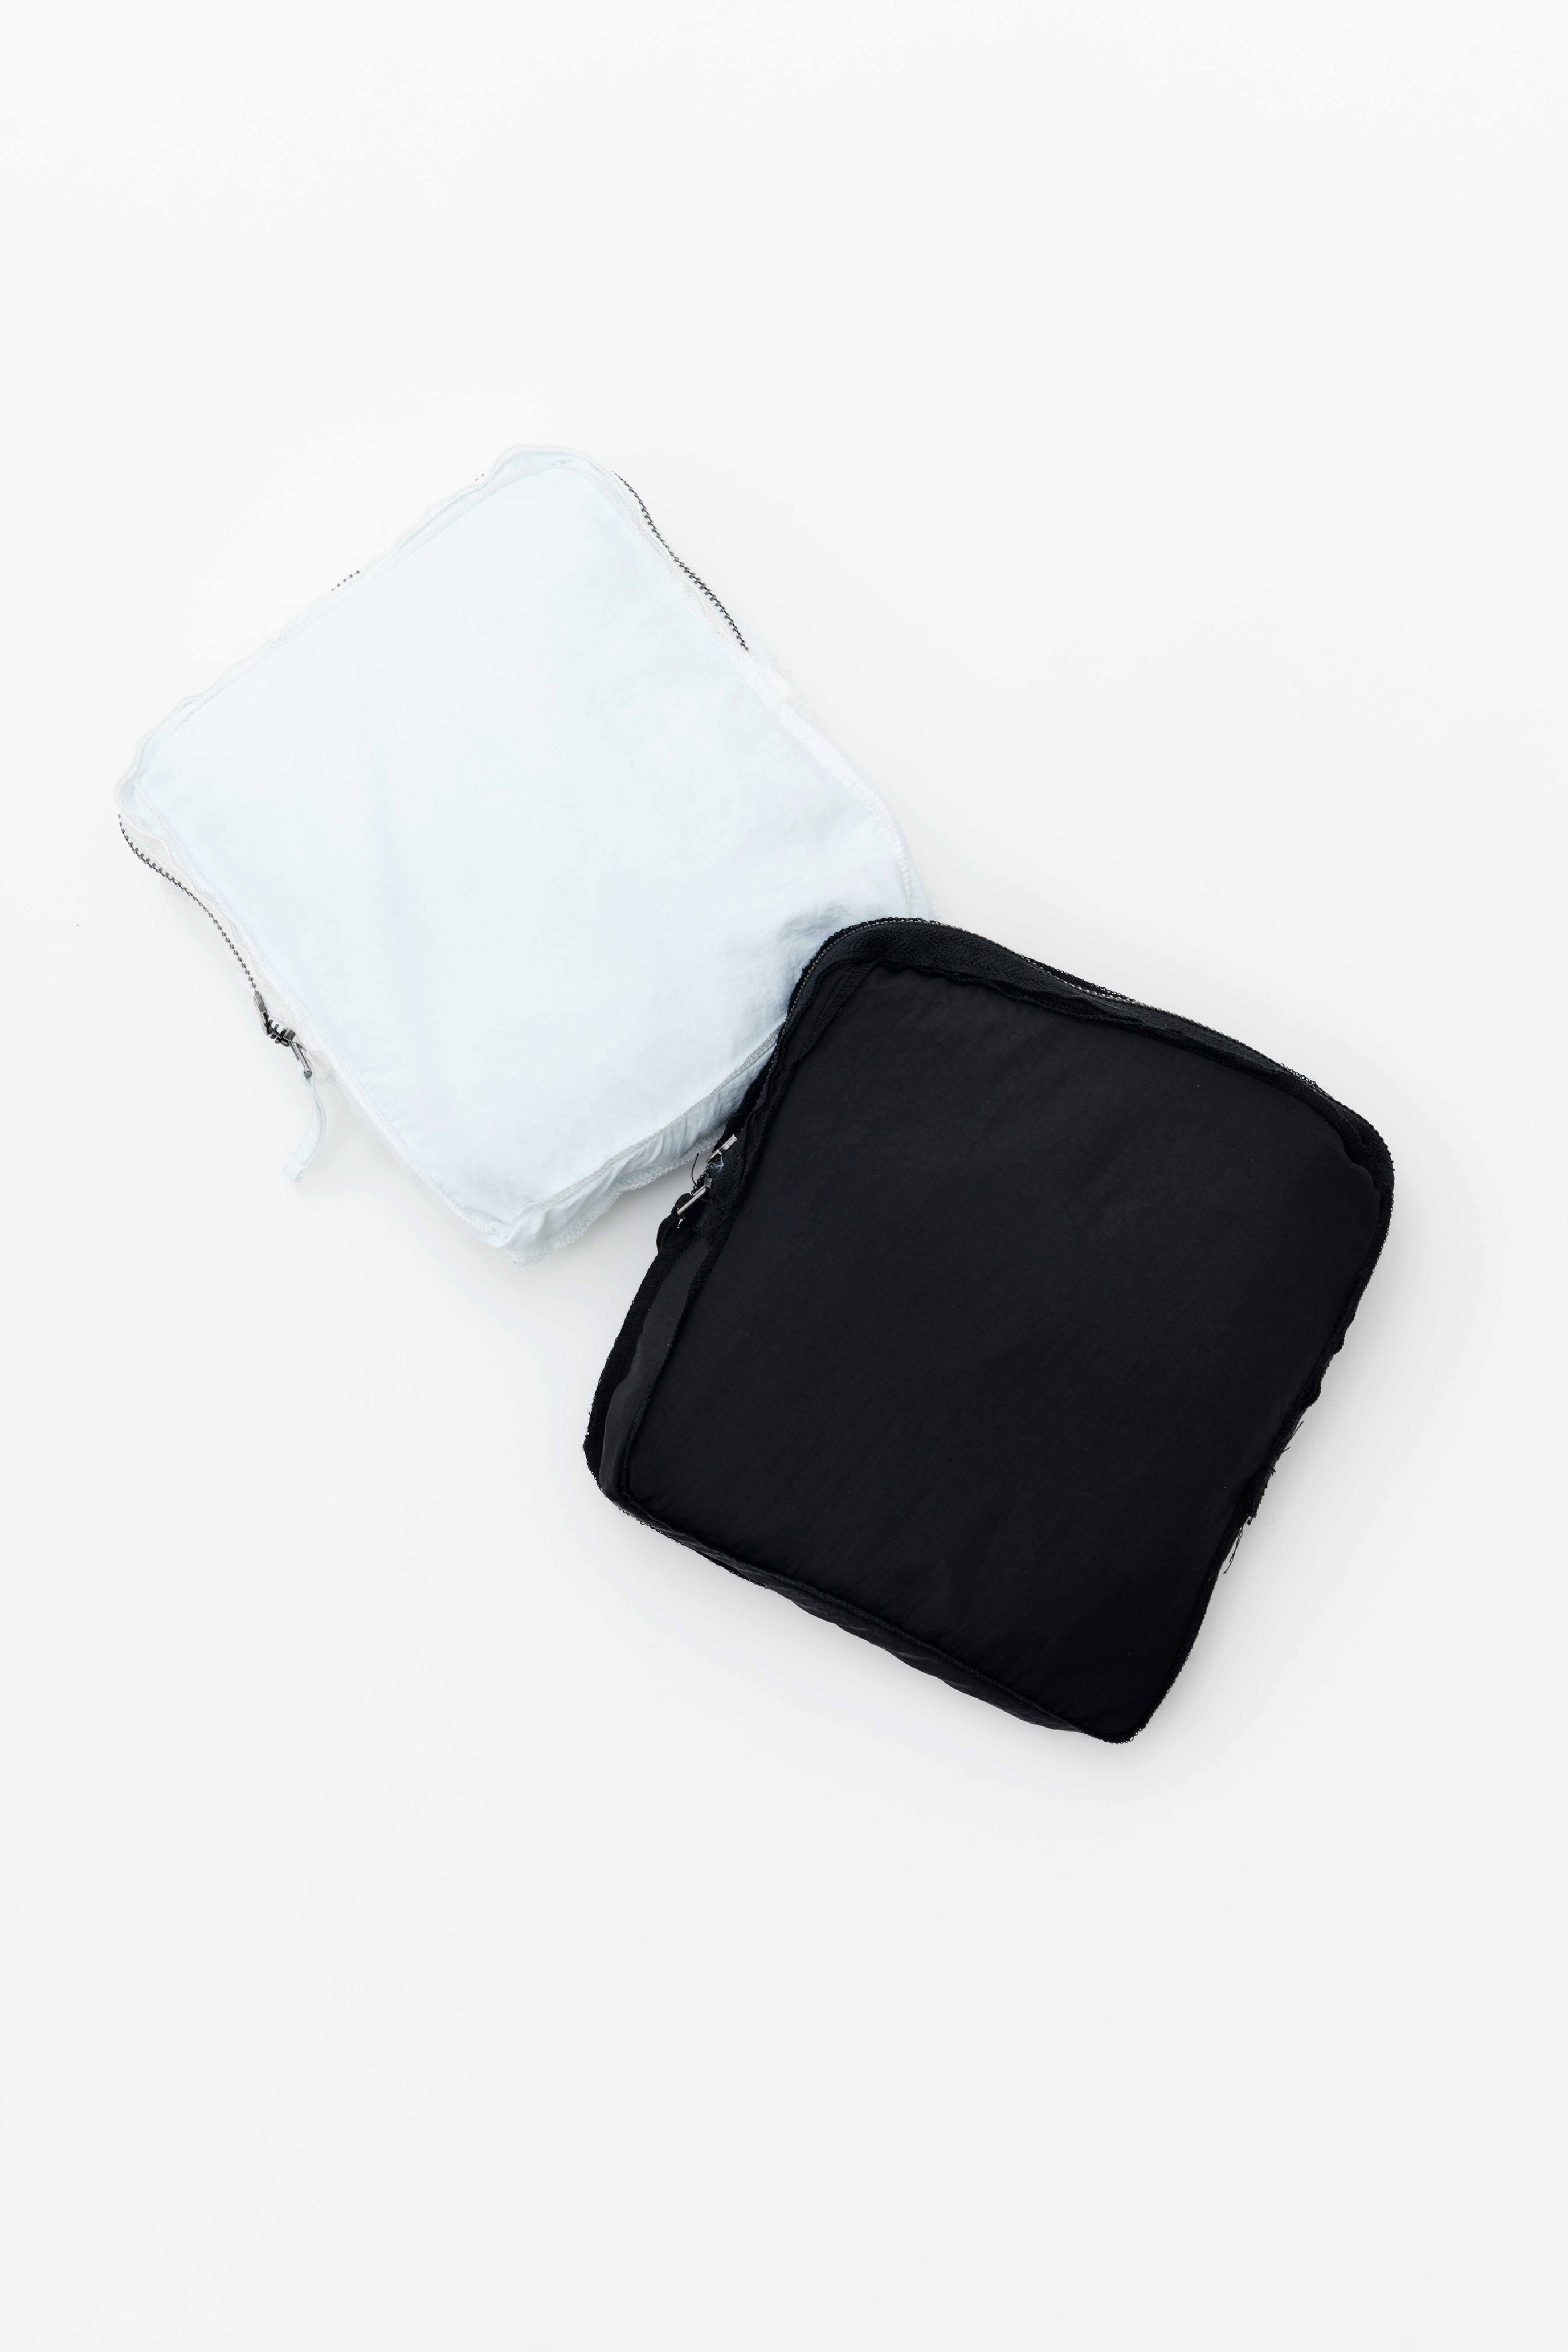 Packable coat (Black / White / Green)